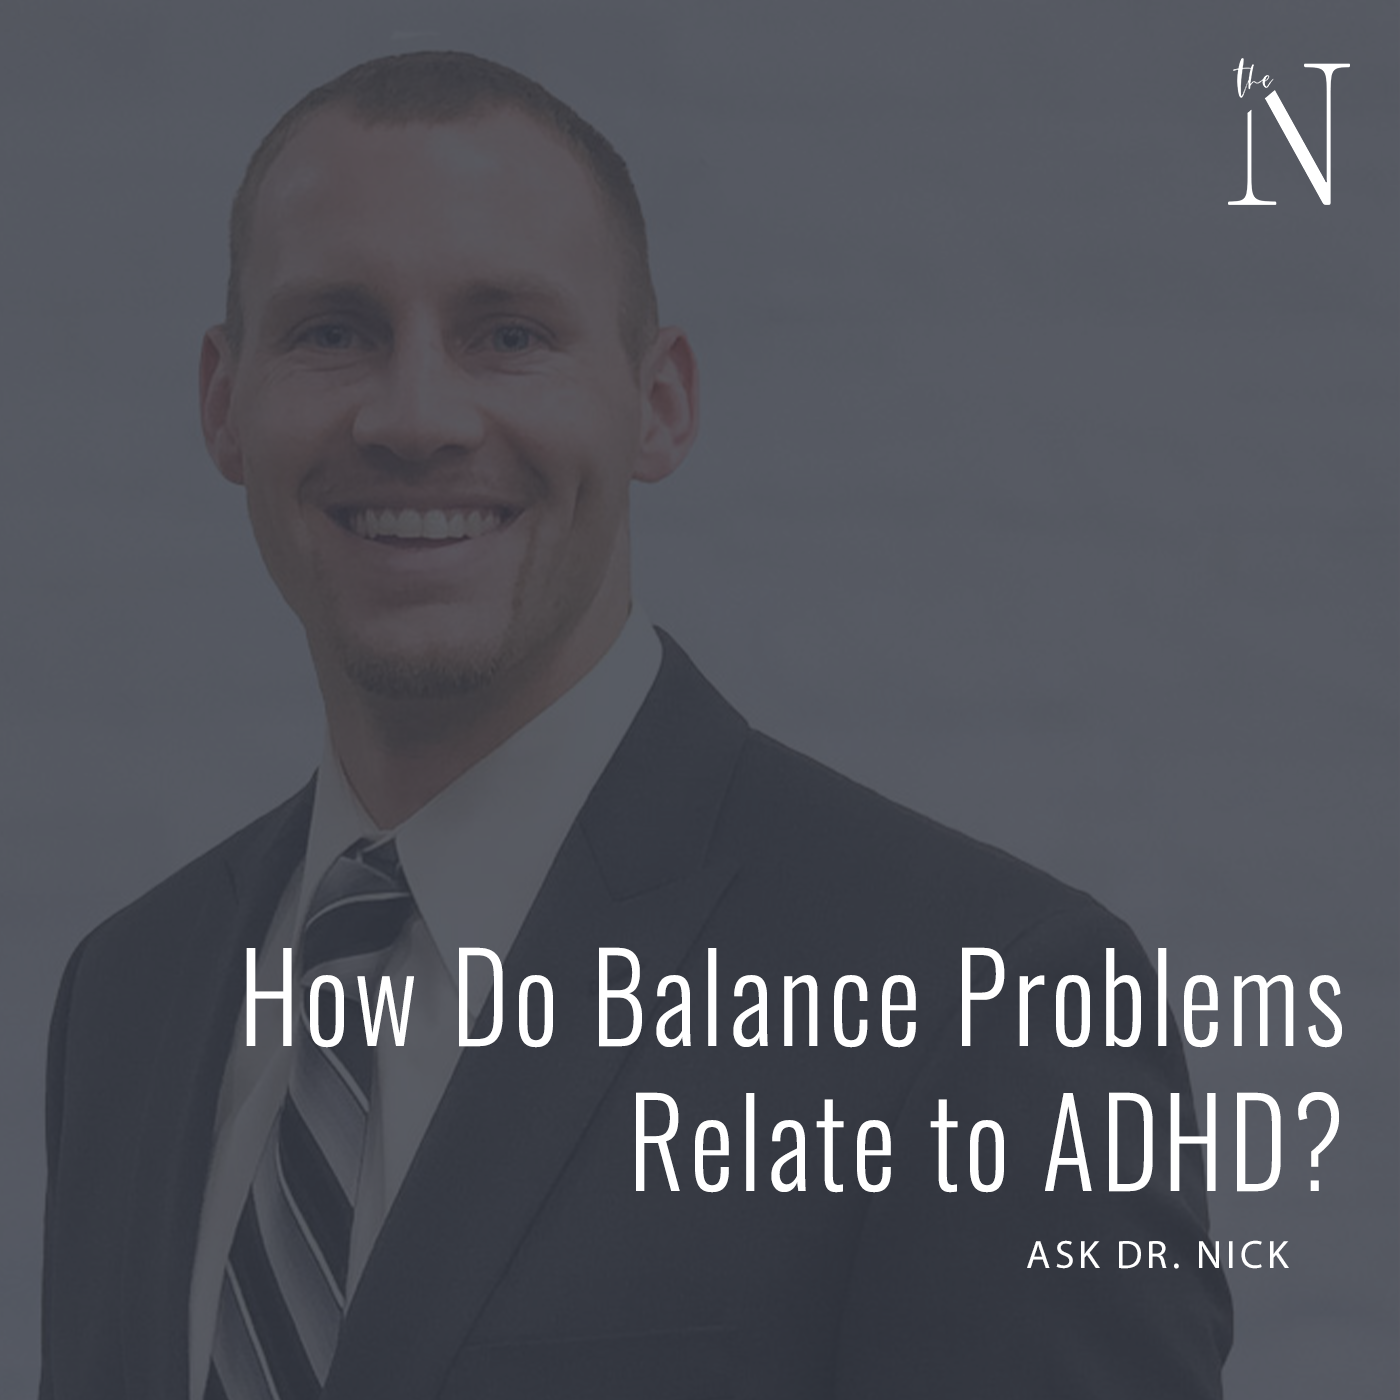 ADHD balance problems